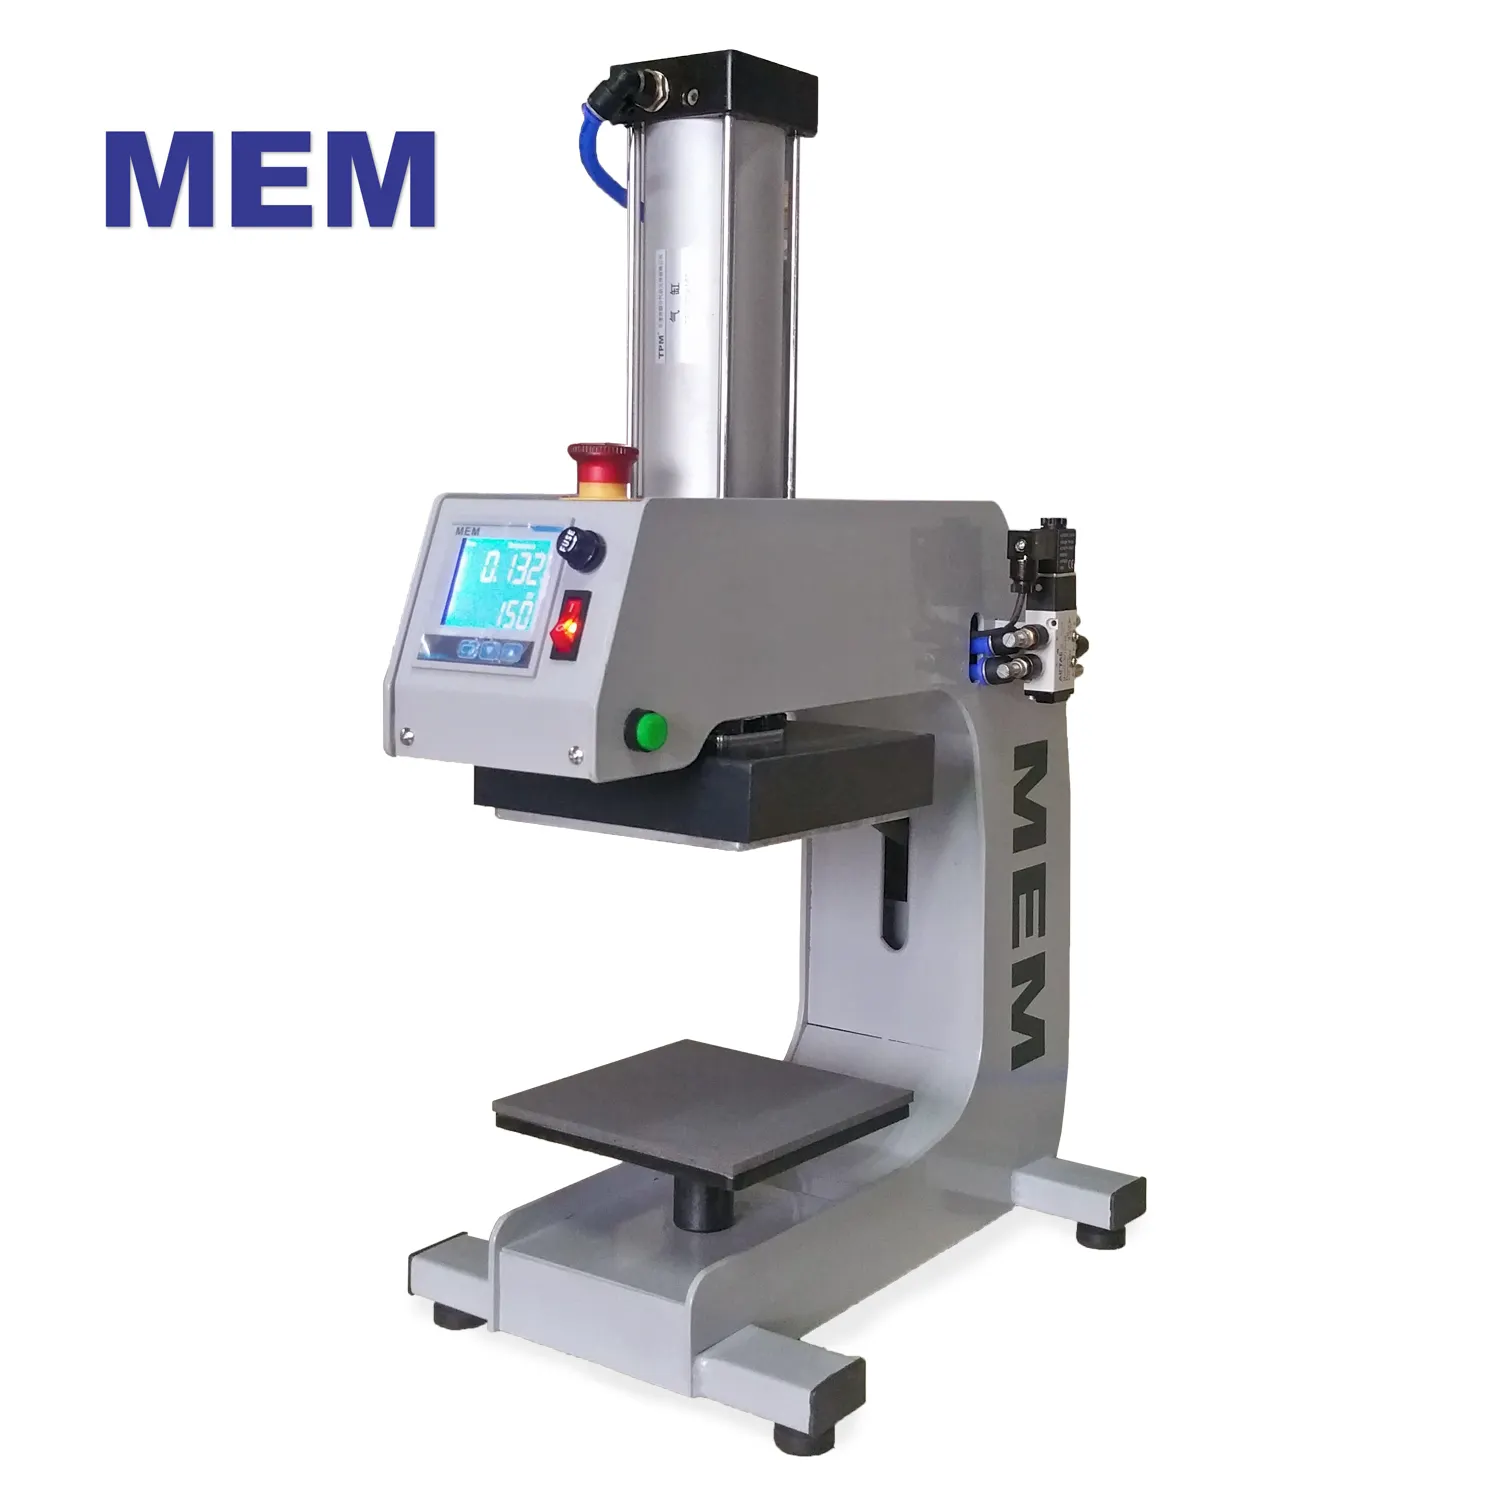 TQ1-1515 MEM popular Pneumatic automatic dual platen heat press 15*15 cm machine